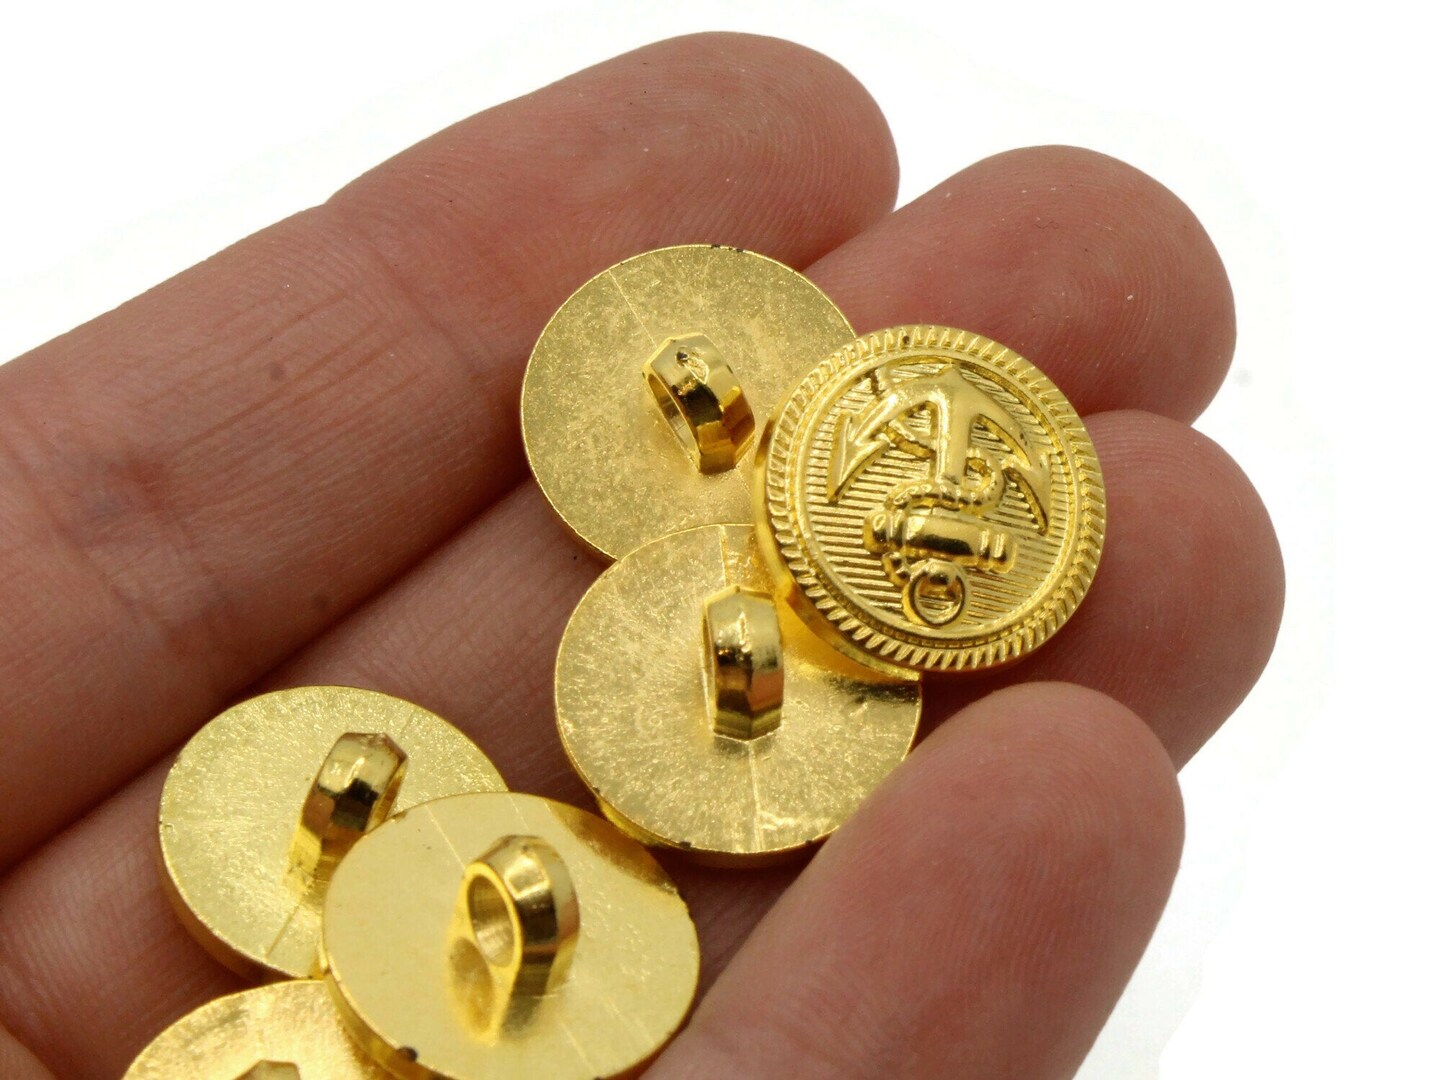 10 15mm Anchor Buttons - Plastic Gold Shank Buttons